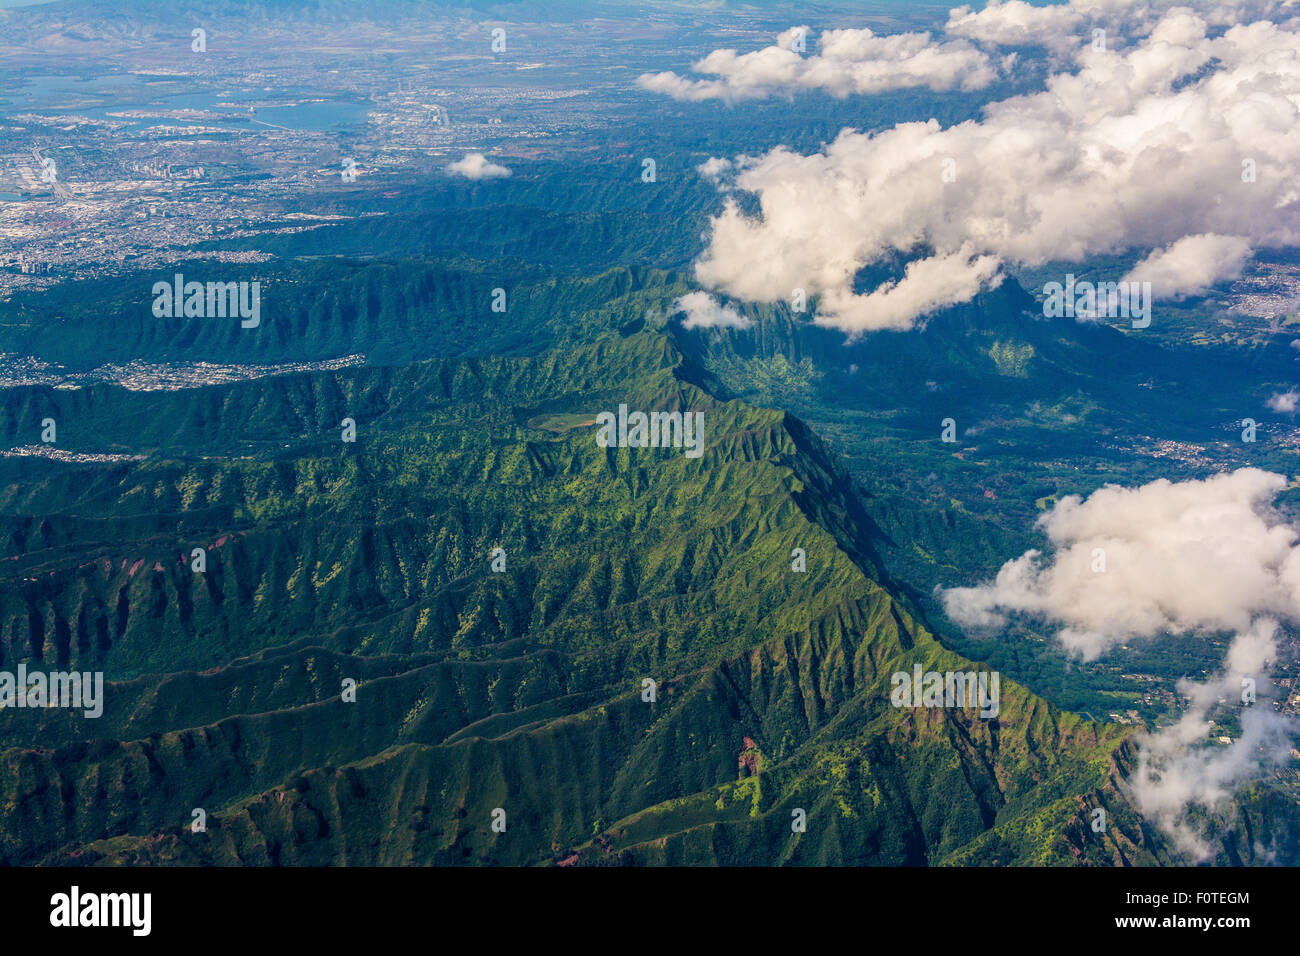 Vista aérea de la isla de Oahu, Hawaii Foto de stock